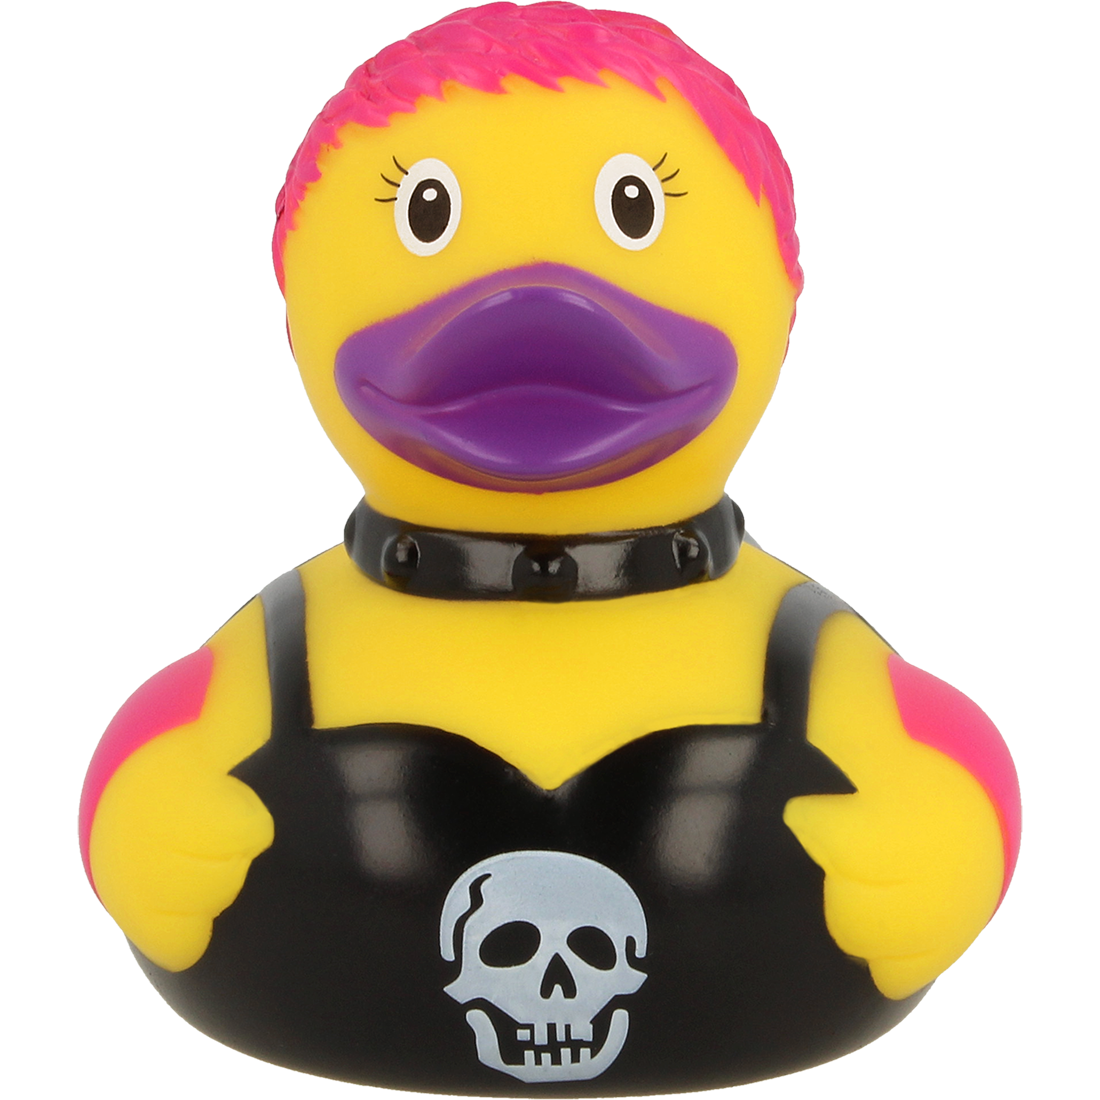 Women's punk duck